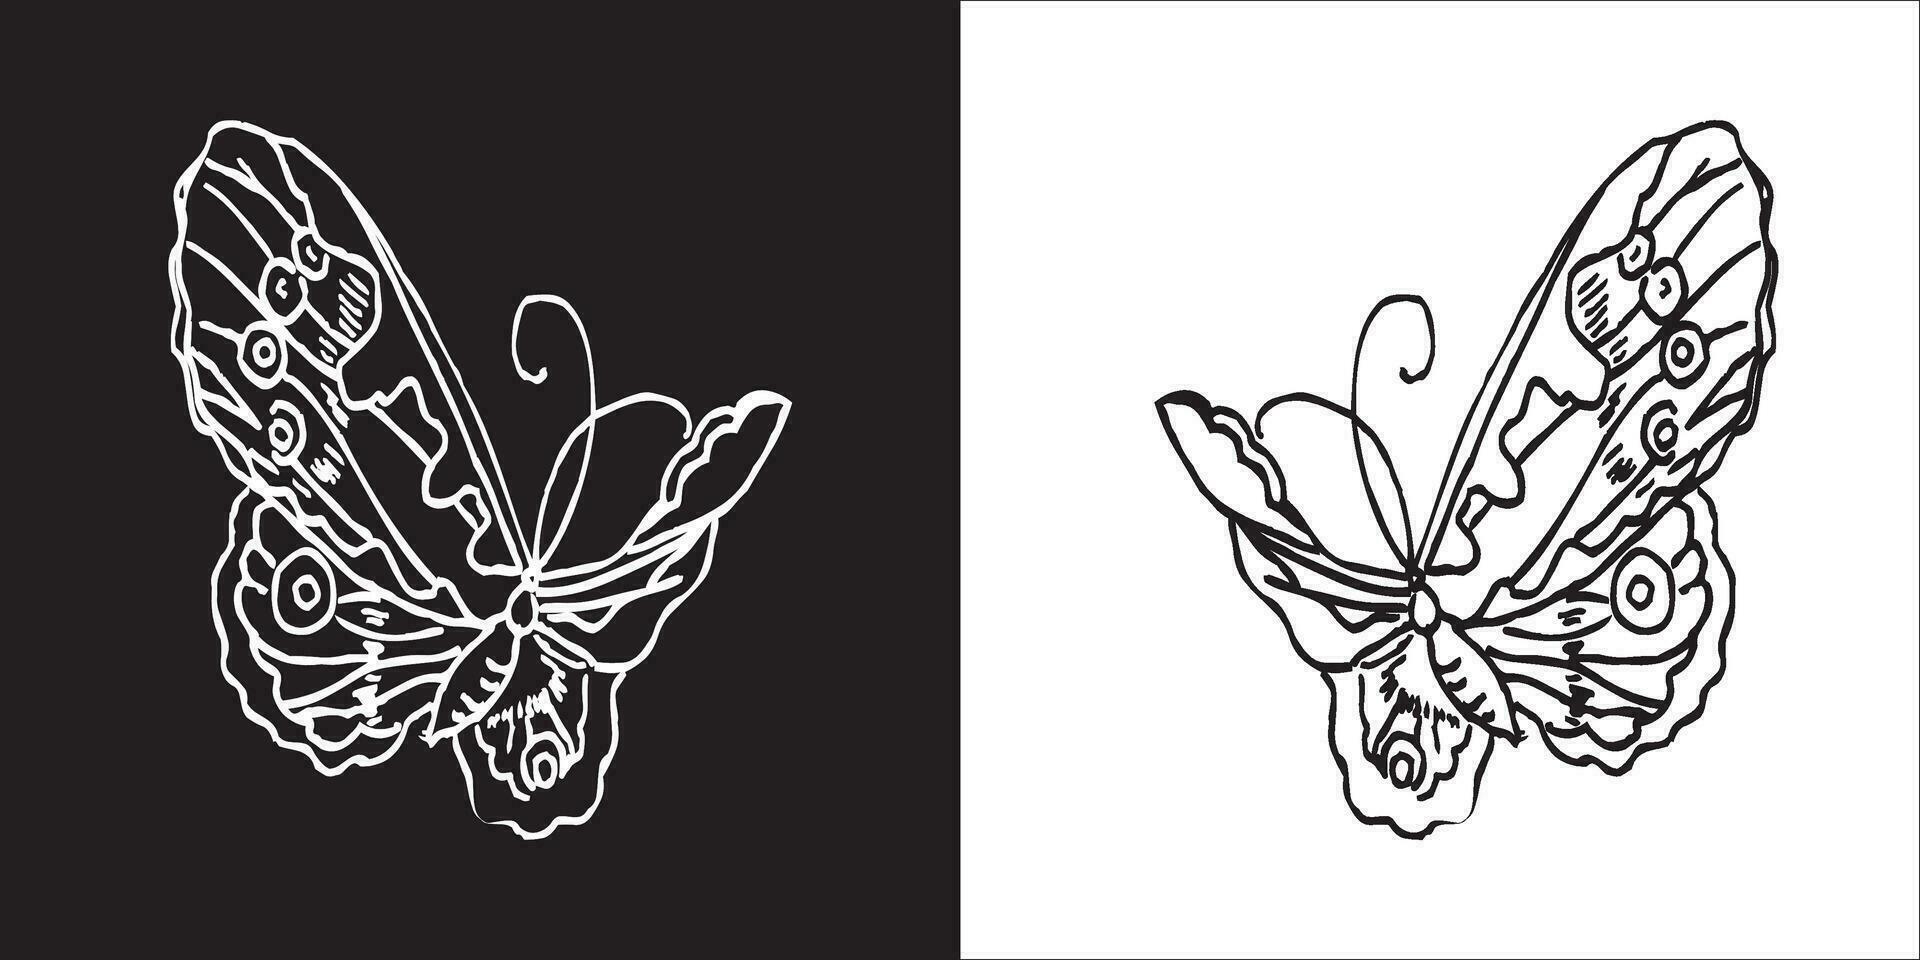 Illustration Vektor Grafik von Schmetterling Symbol